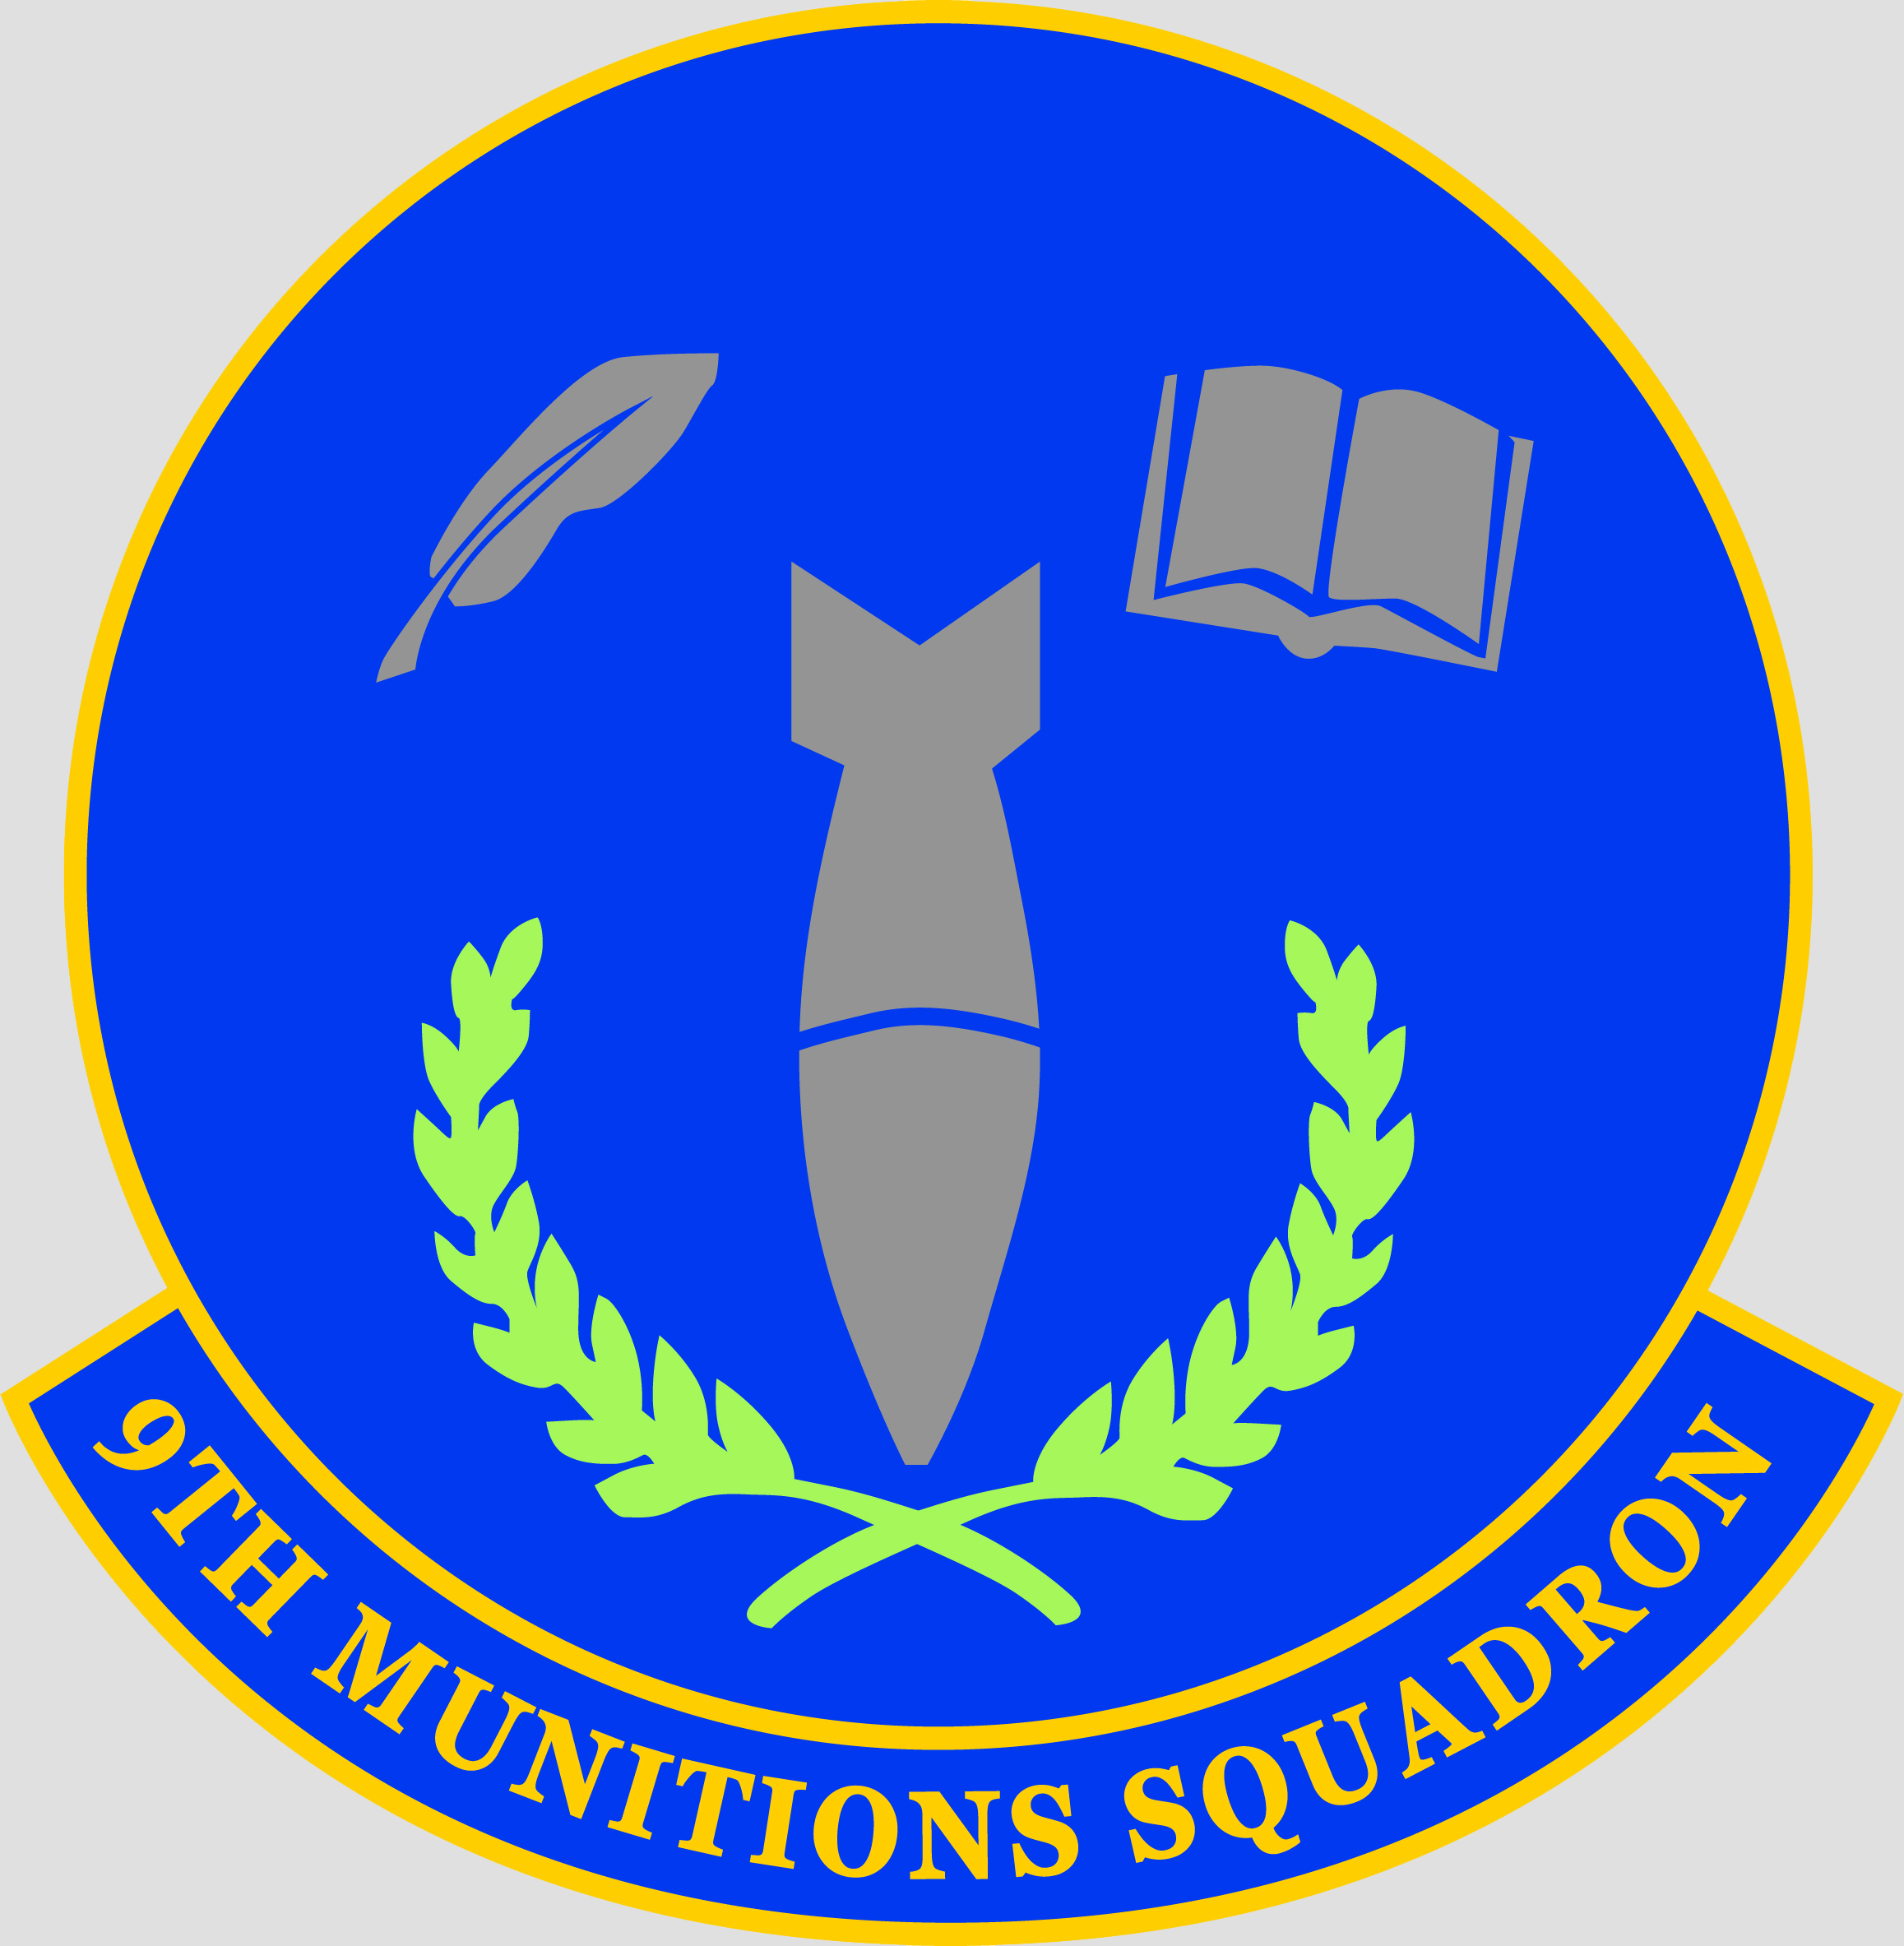 9th Munitions Squadron